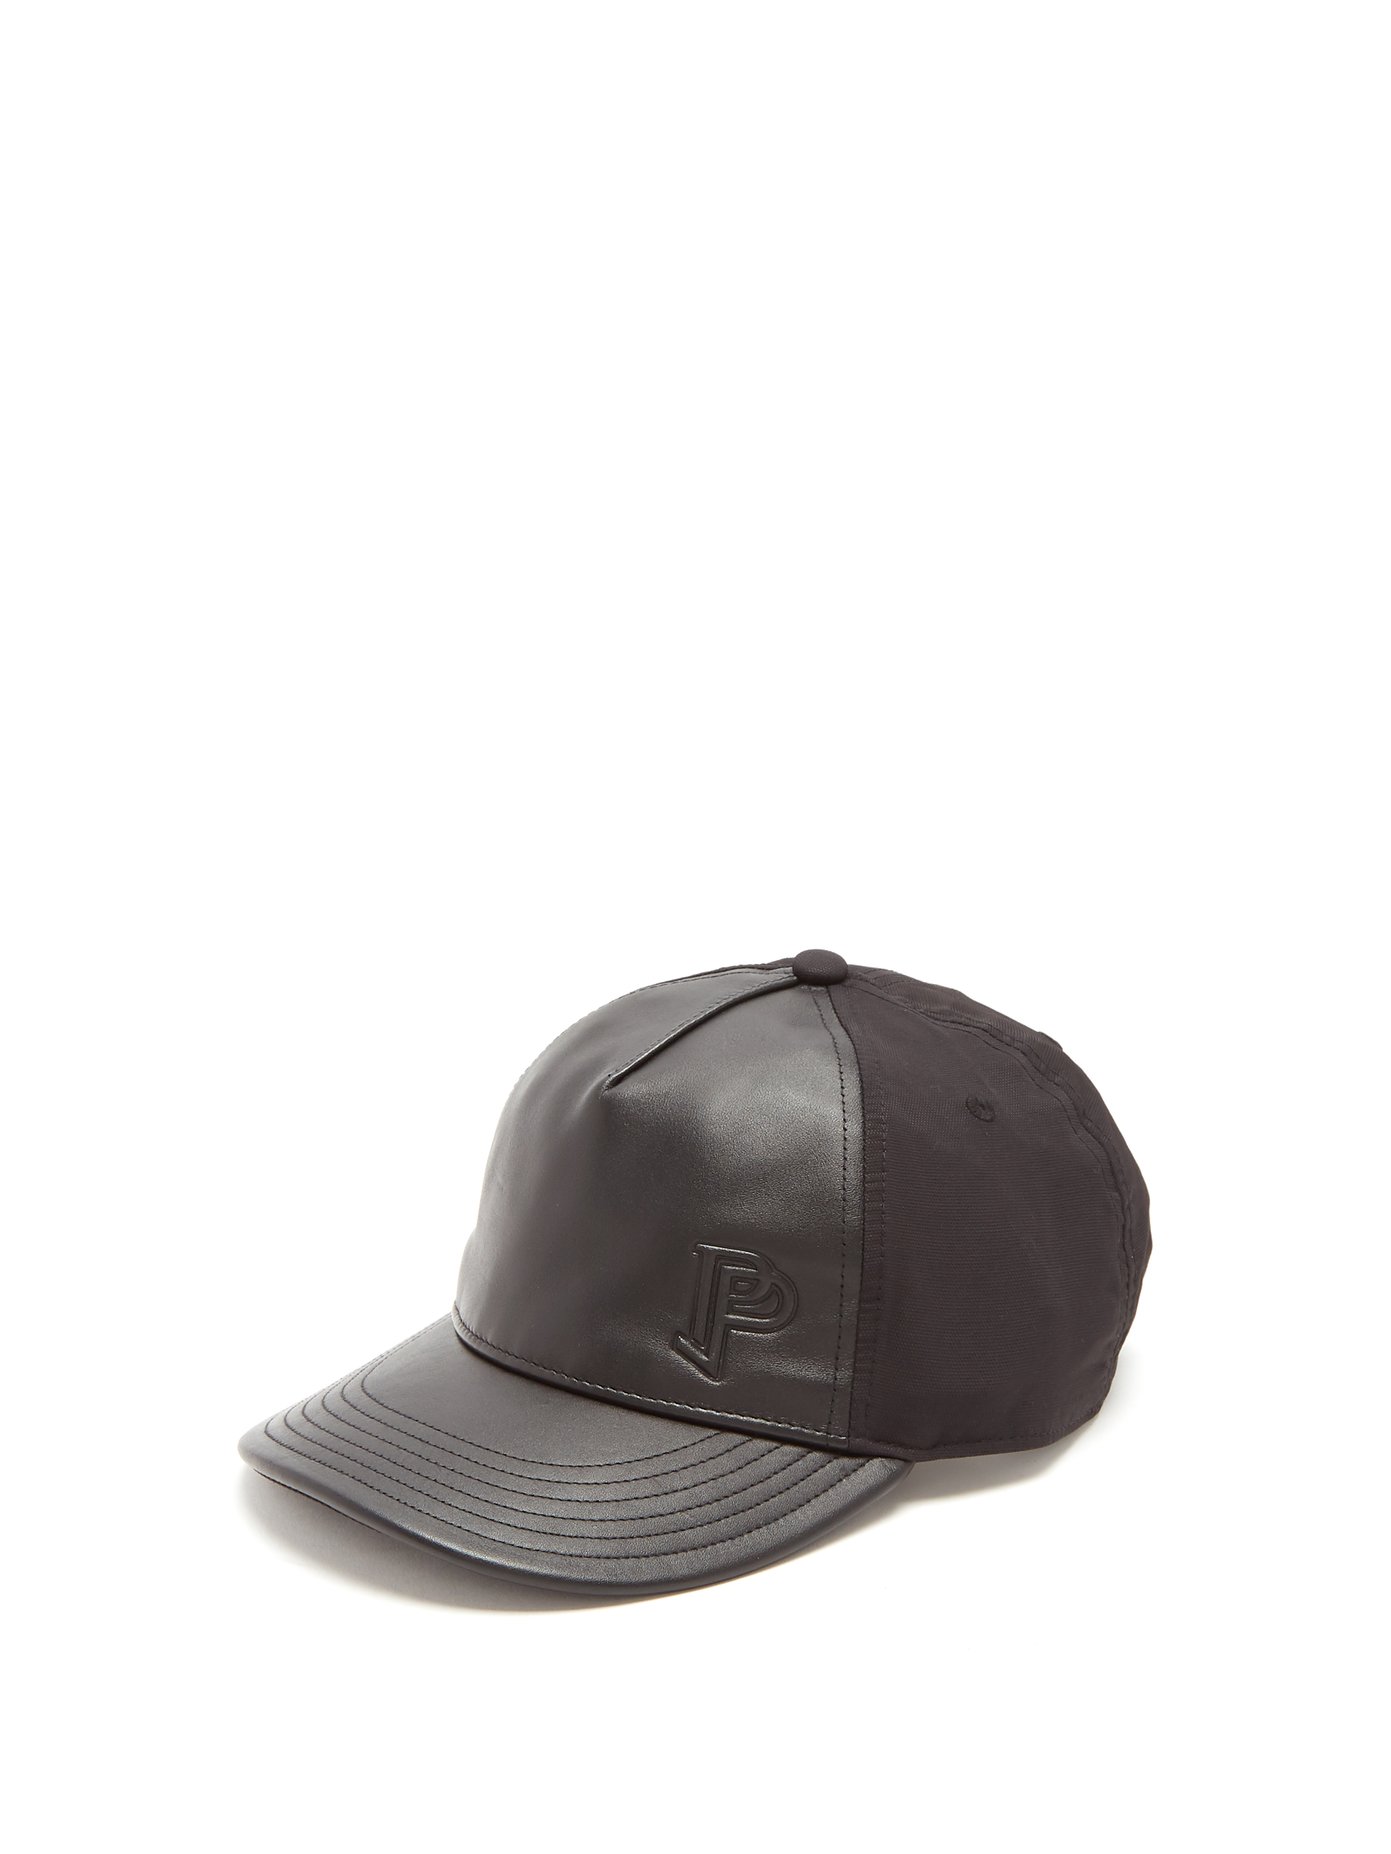 adidas black leather hat